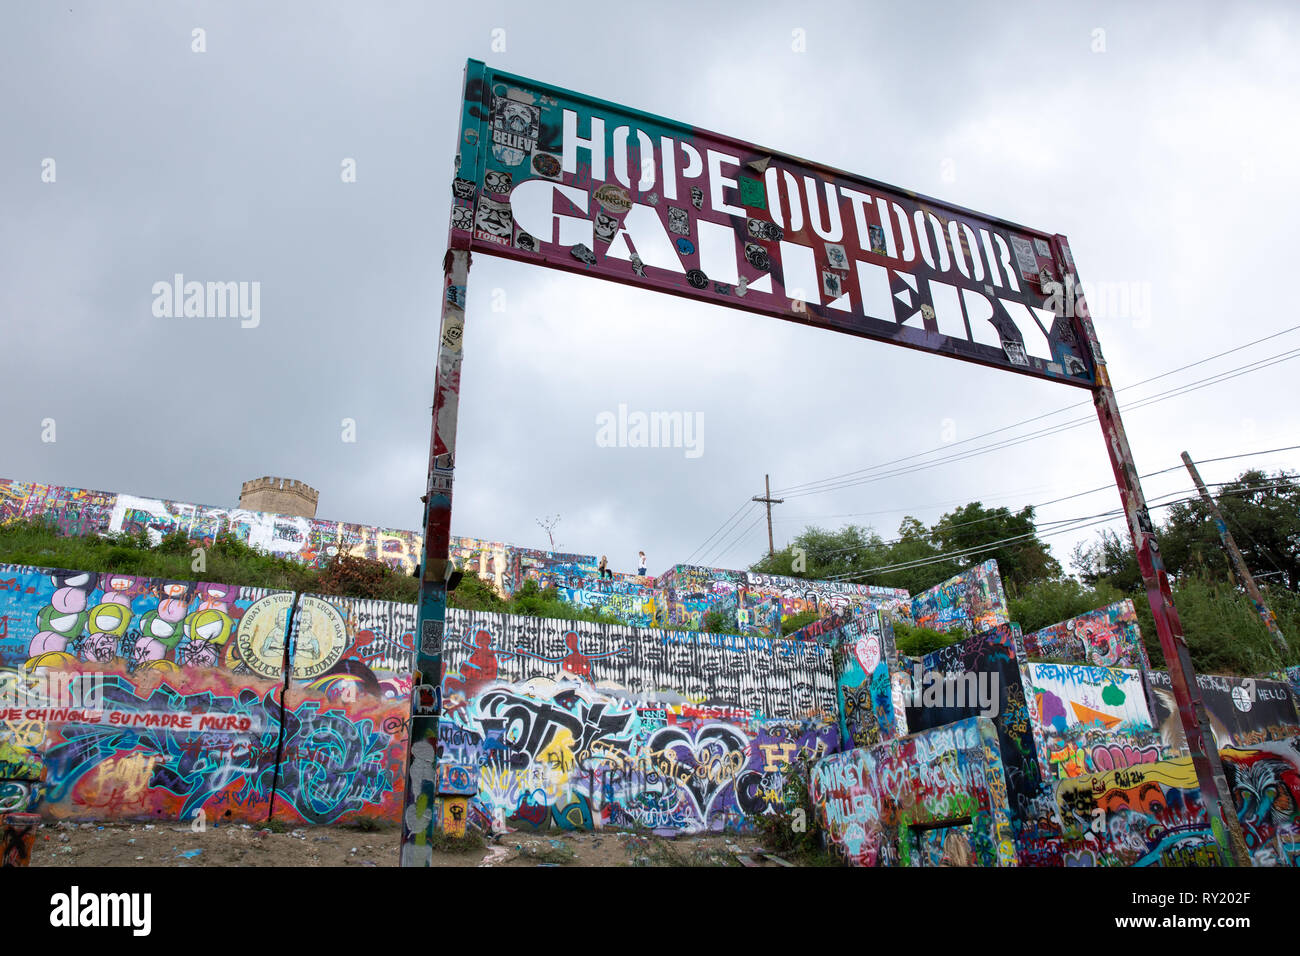 Hope Outdoor Gallery. Austin, Texas. September, 2018 Stock Photo